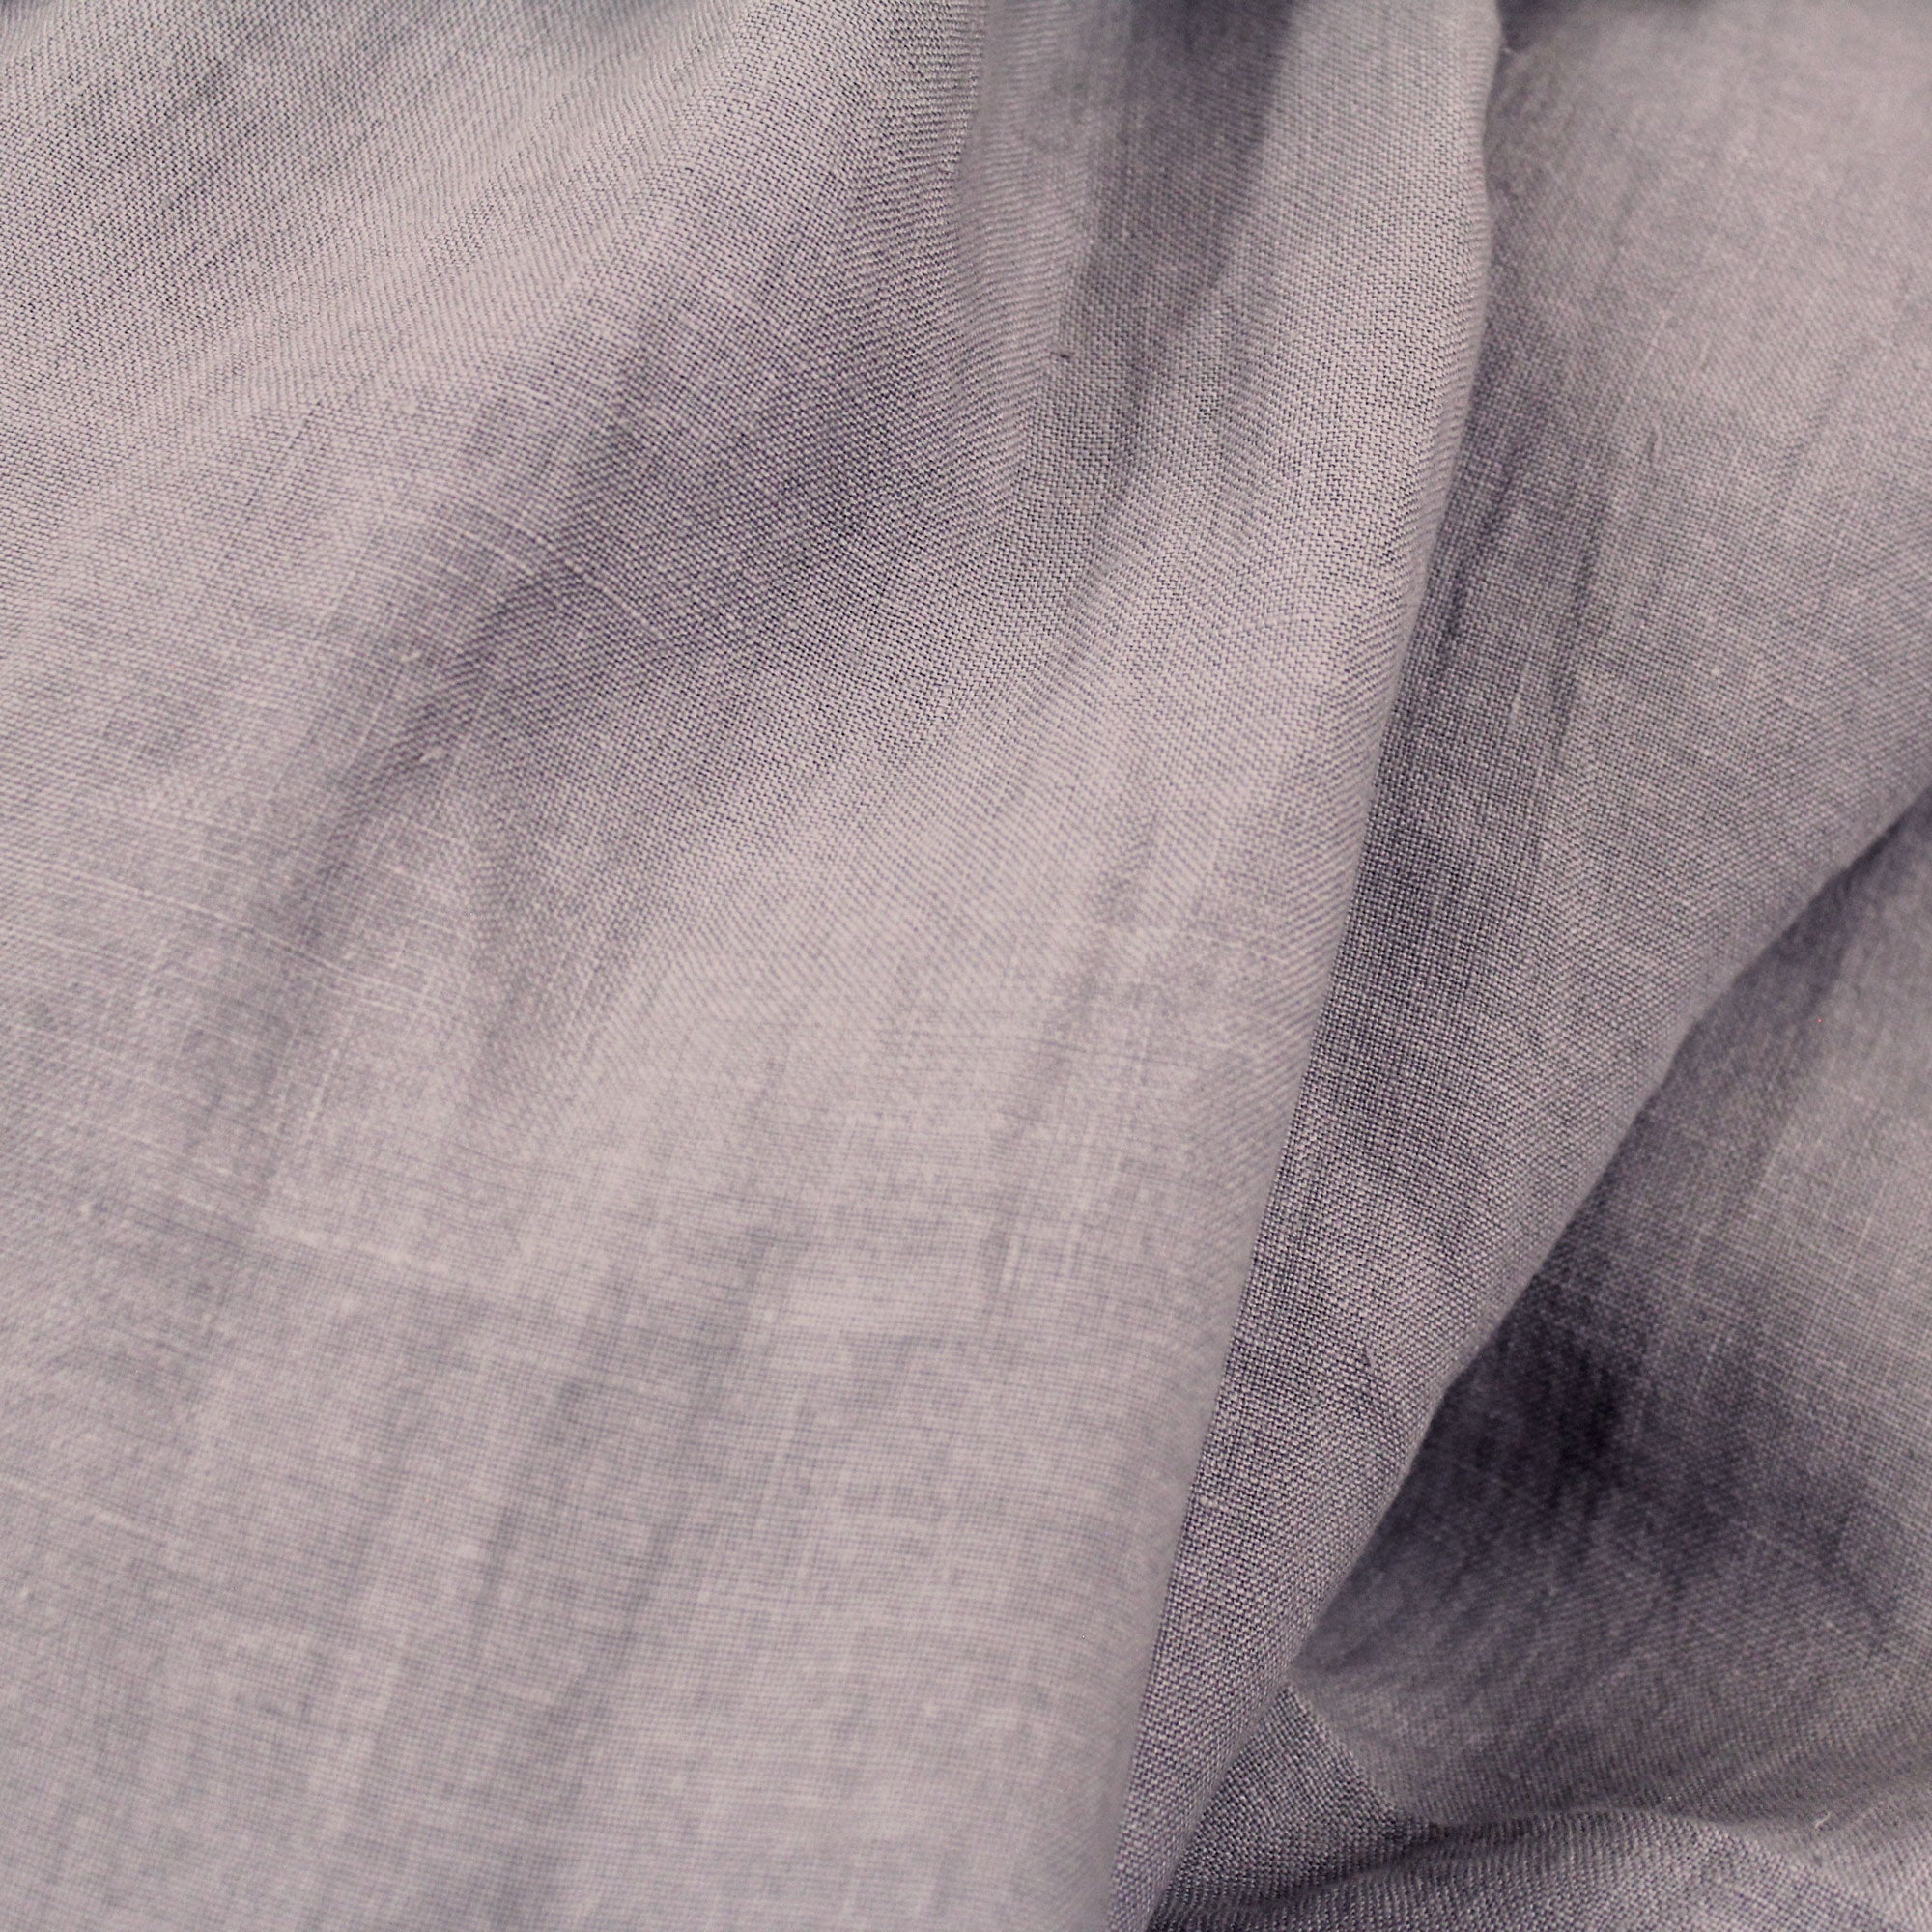 Grayish purple linen fabric